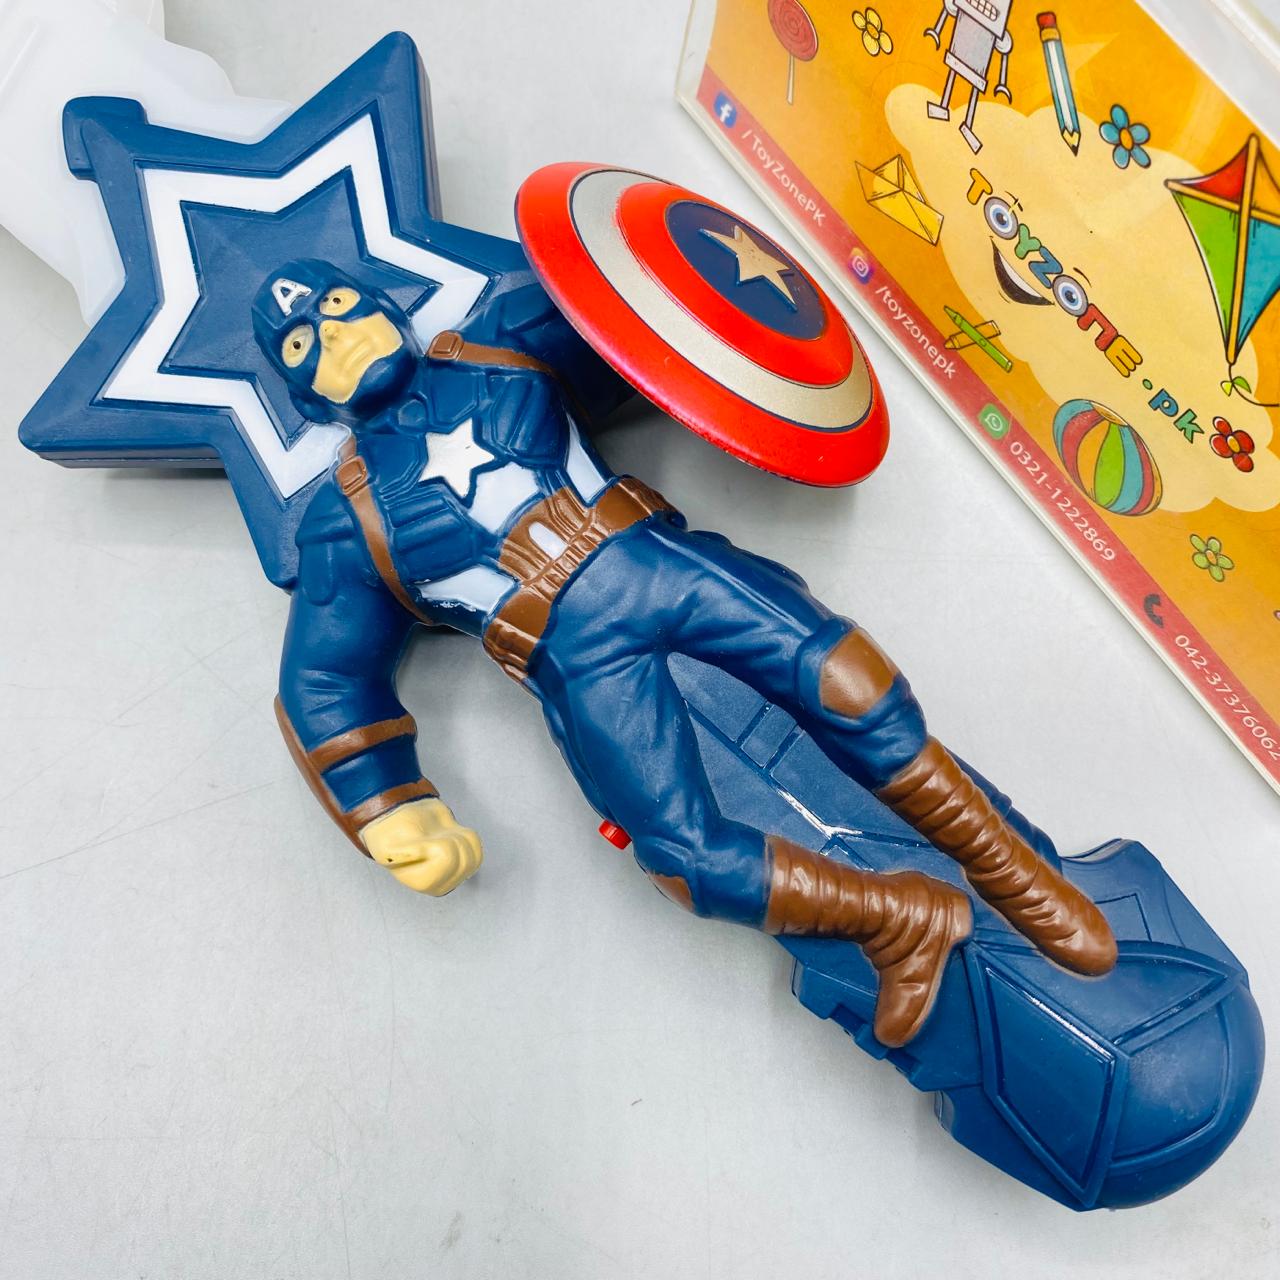 Captain America Shaped Sword